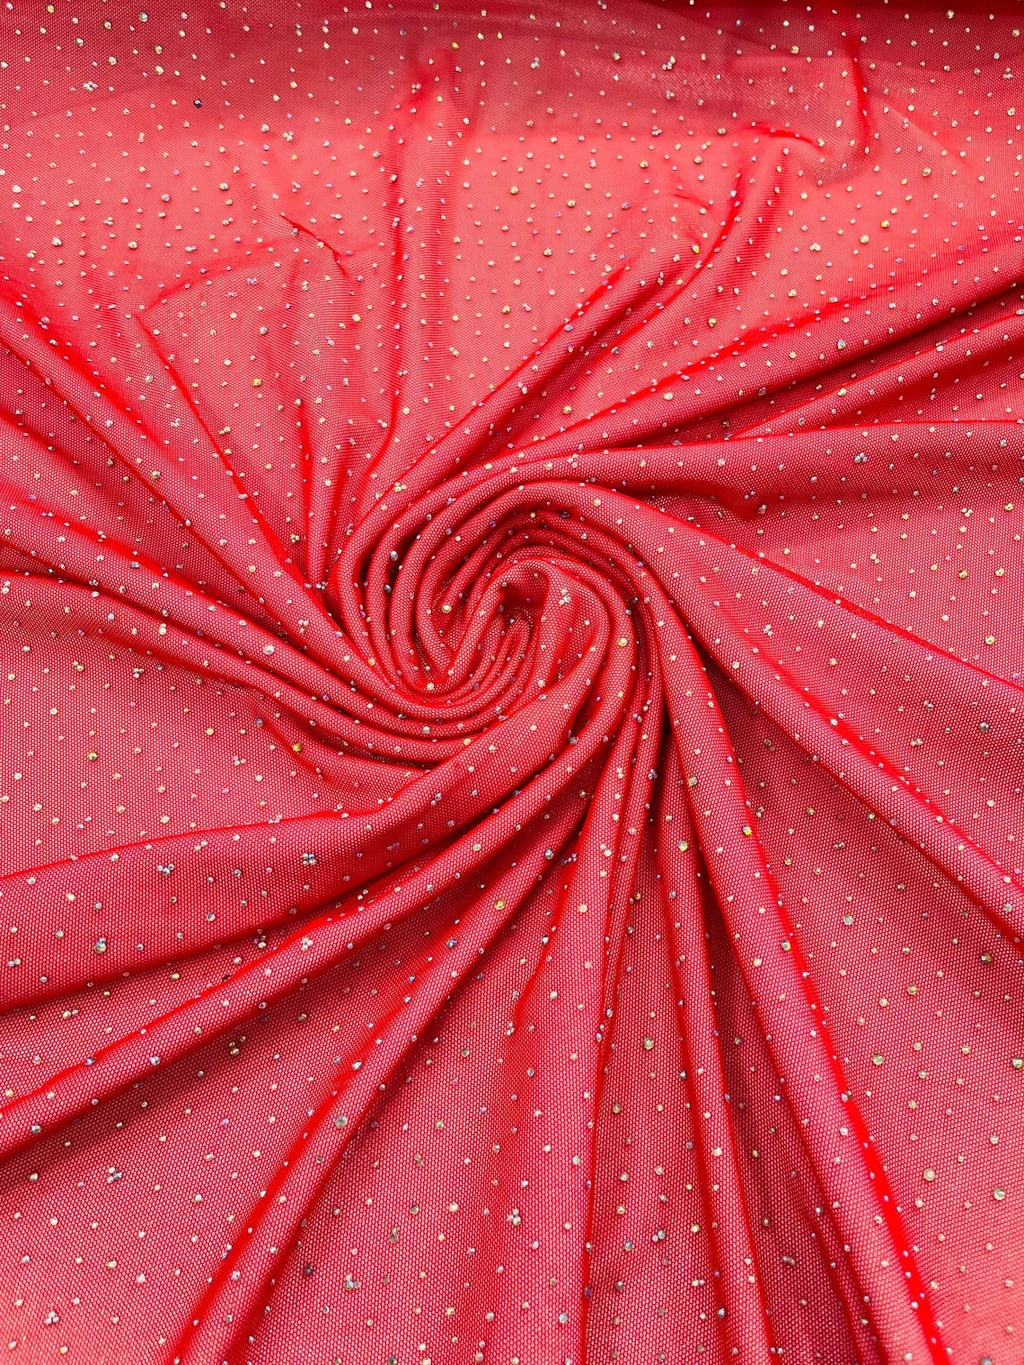 Power Mesh Polyester Rhinestone Fabric - Red - 4 Way Stretch Power Mes